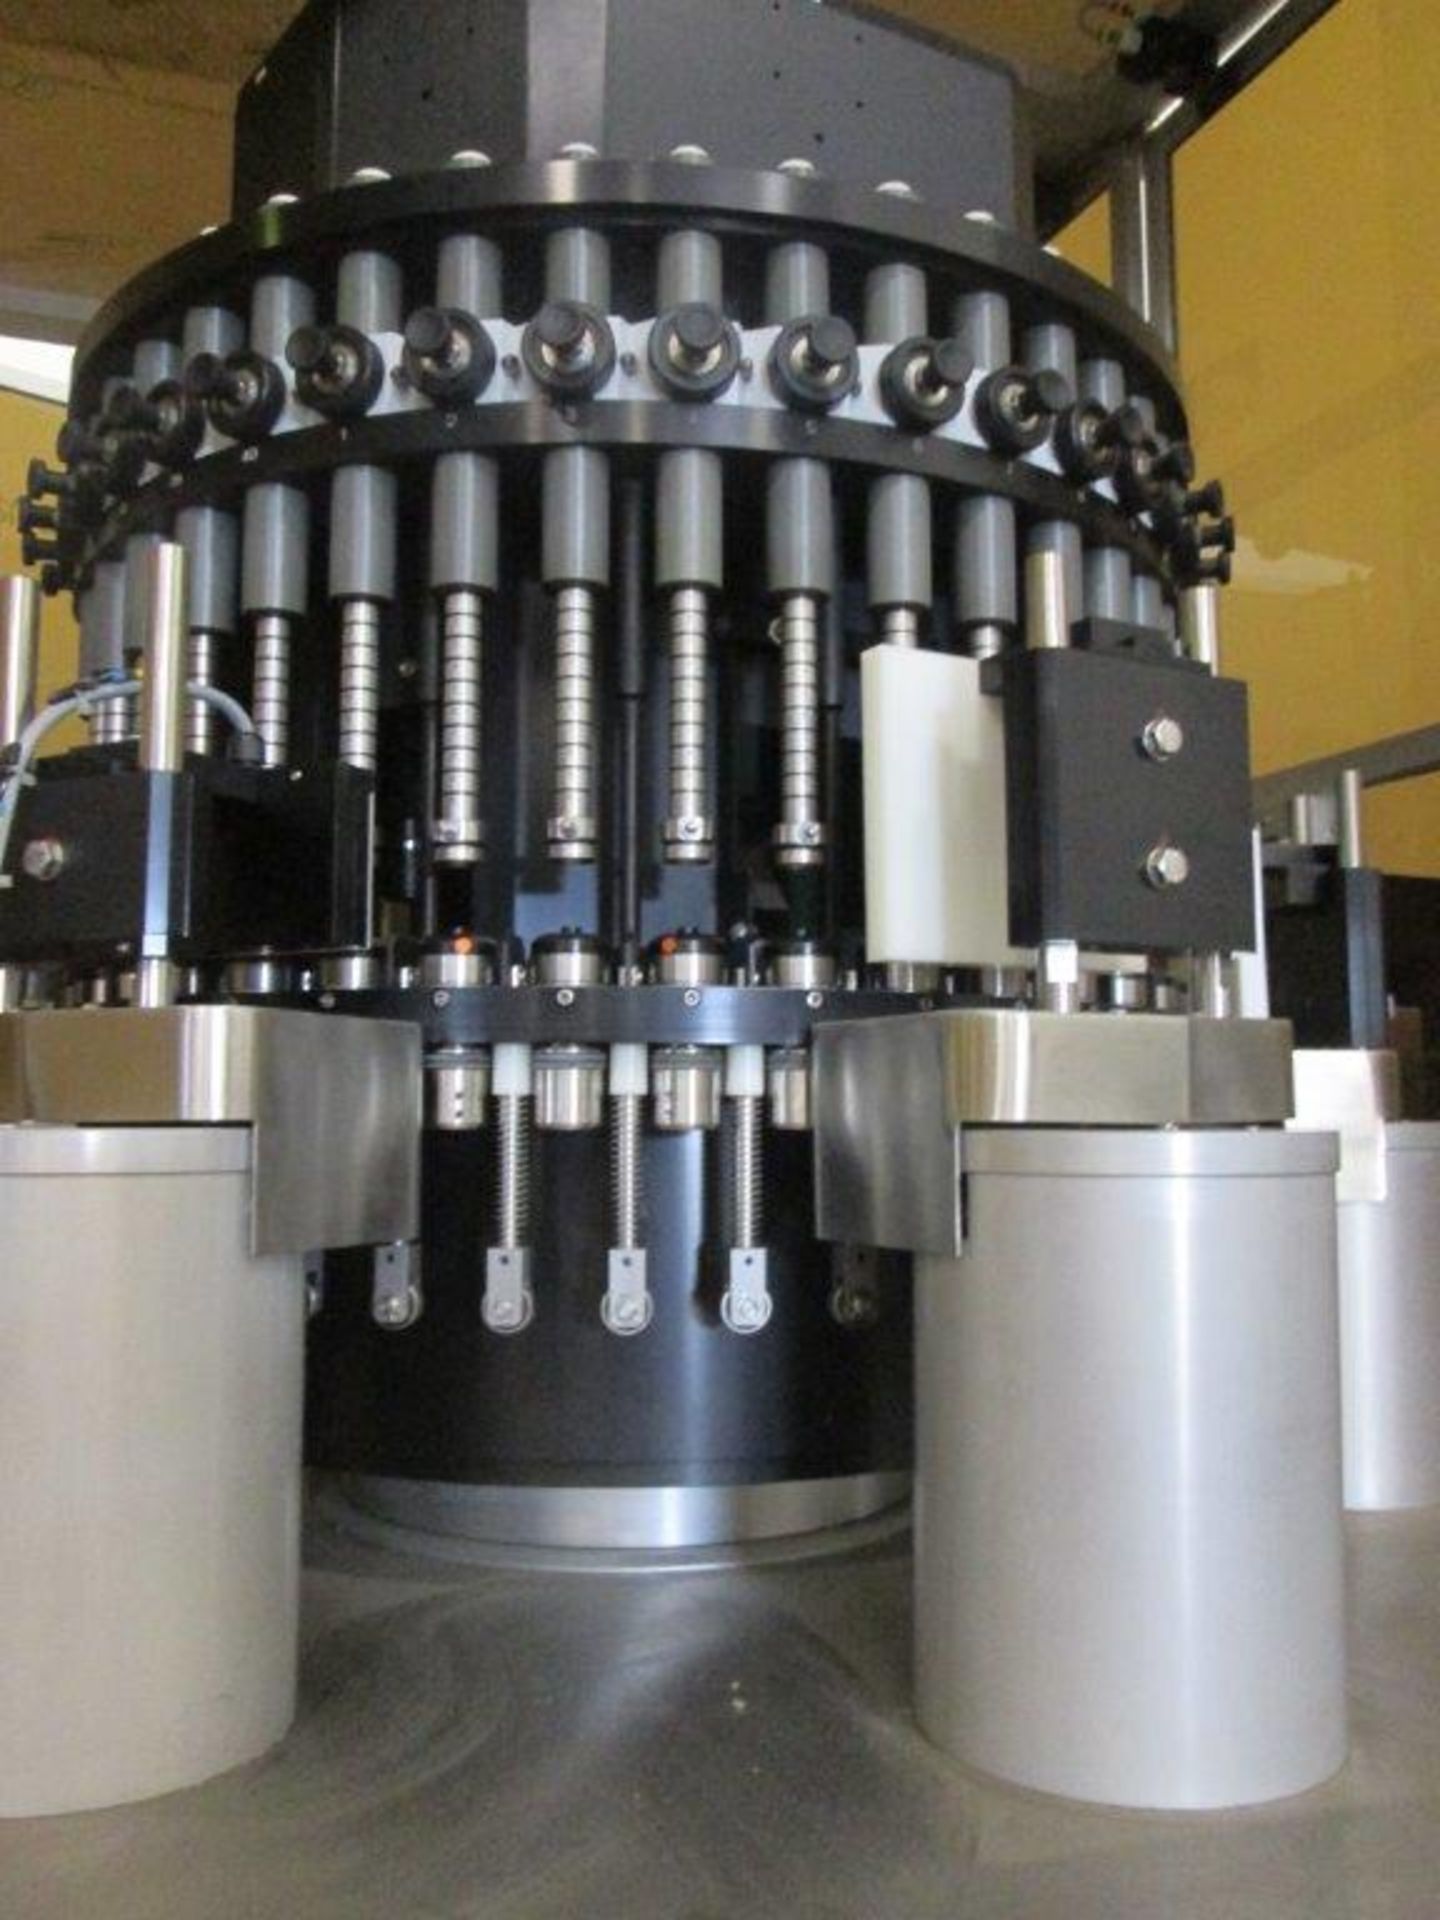 Seidenader LI-40 Automatic Vial Inspection Machine - Image 7 of 16